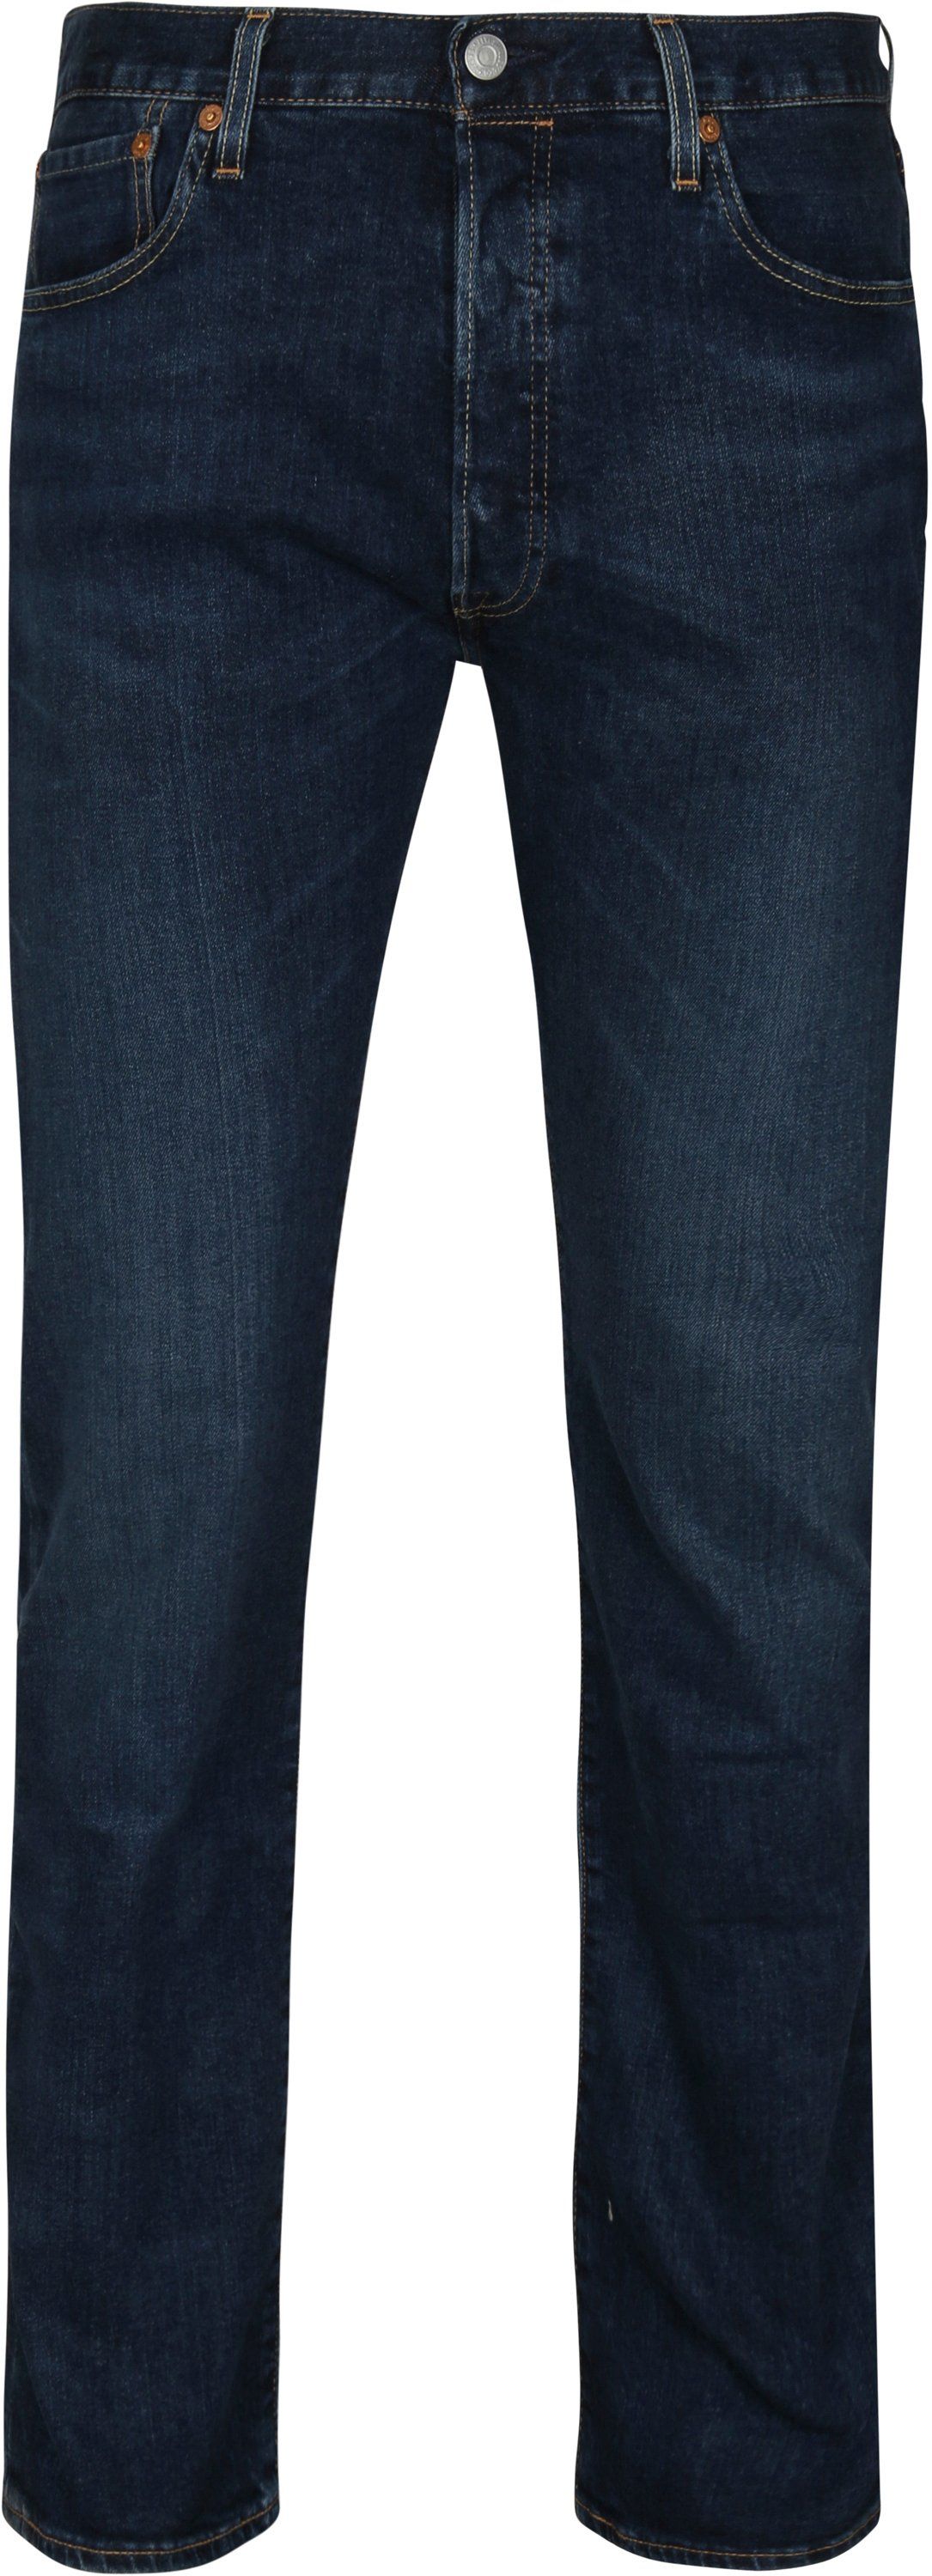 Levi's Jeans 501 Original Fit Dark Blue Dark Blue size W 31